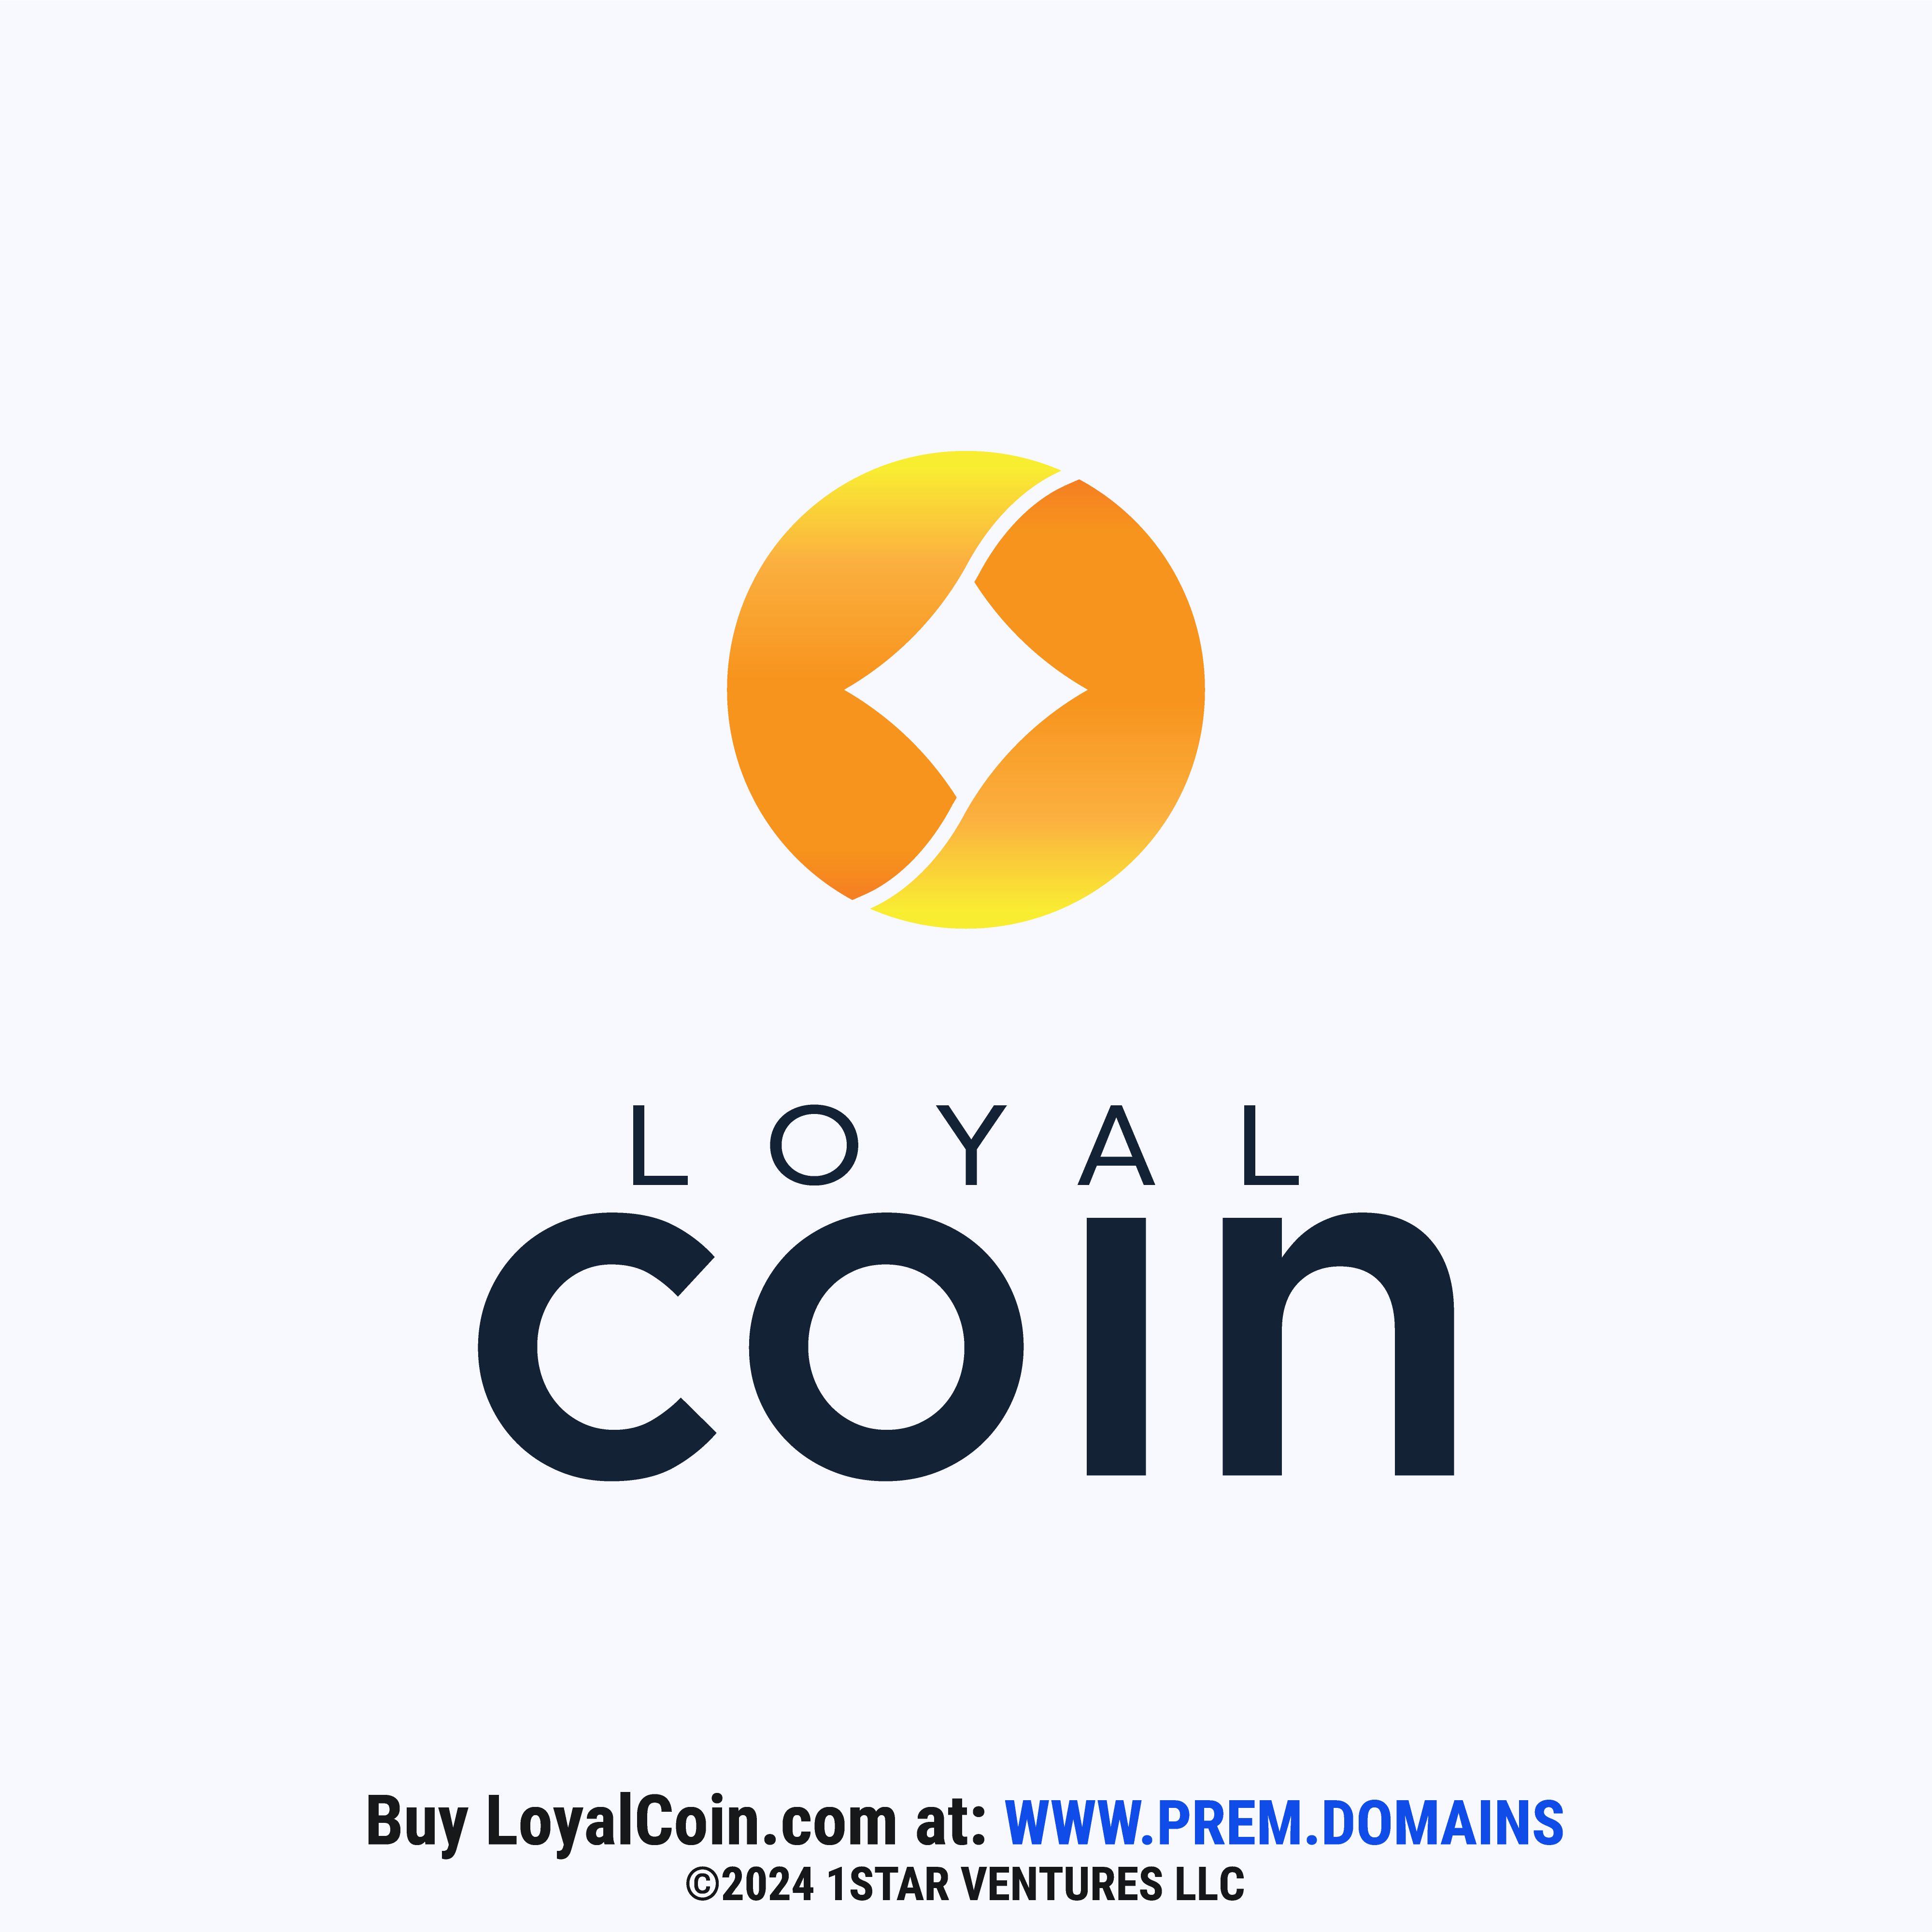 loyalcoin.com custom logo product card image